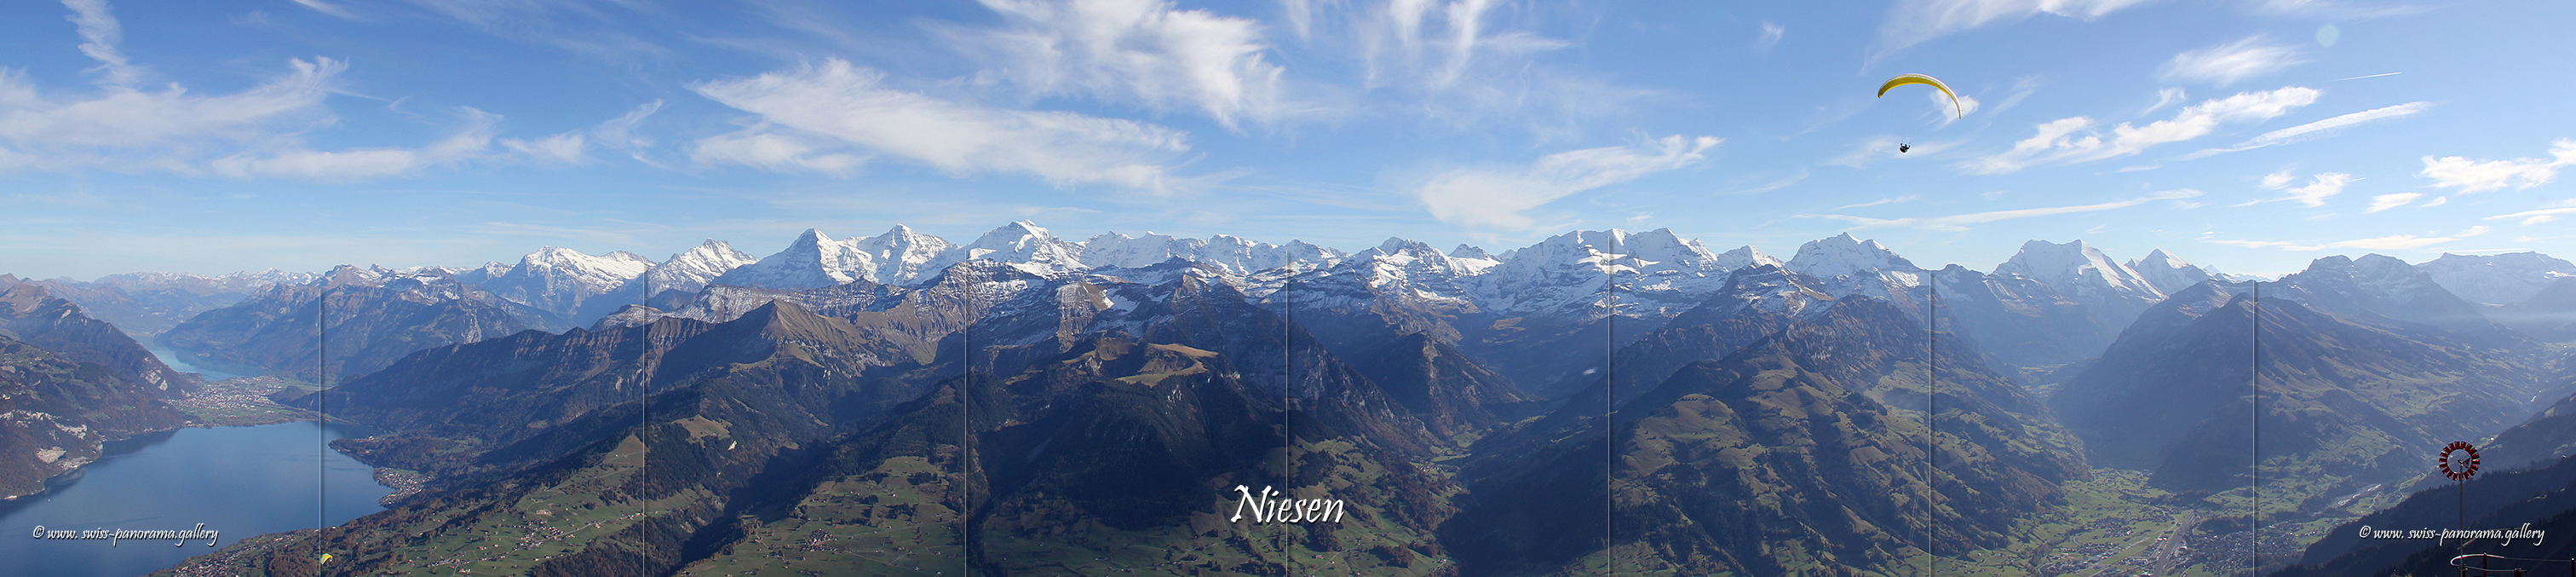 Niesen Panorama Berner Oberland Panorama swiss-panorama.gallery